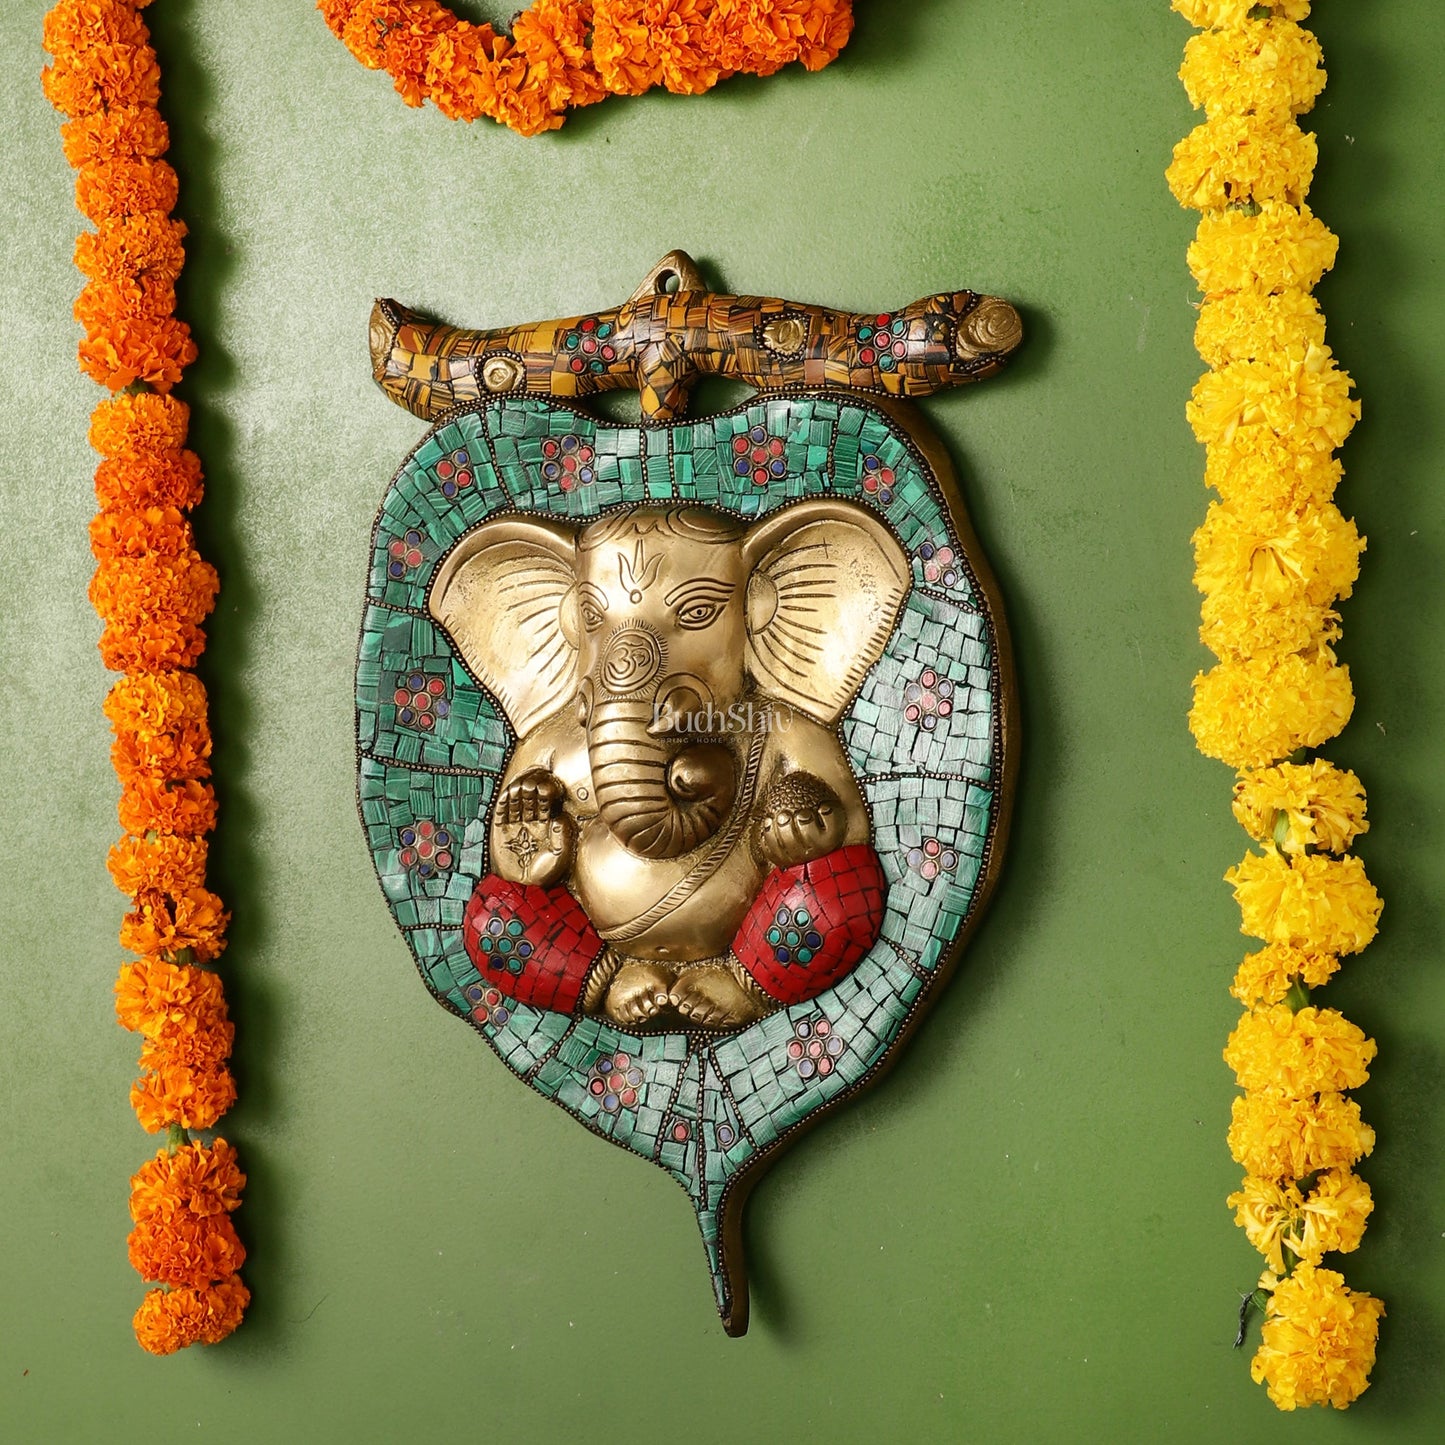 Brass Ganesha on Leaf Wall Hanging with Stonework - 13 x 9 inch - Budhshiv.com